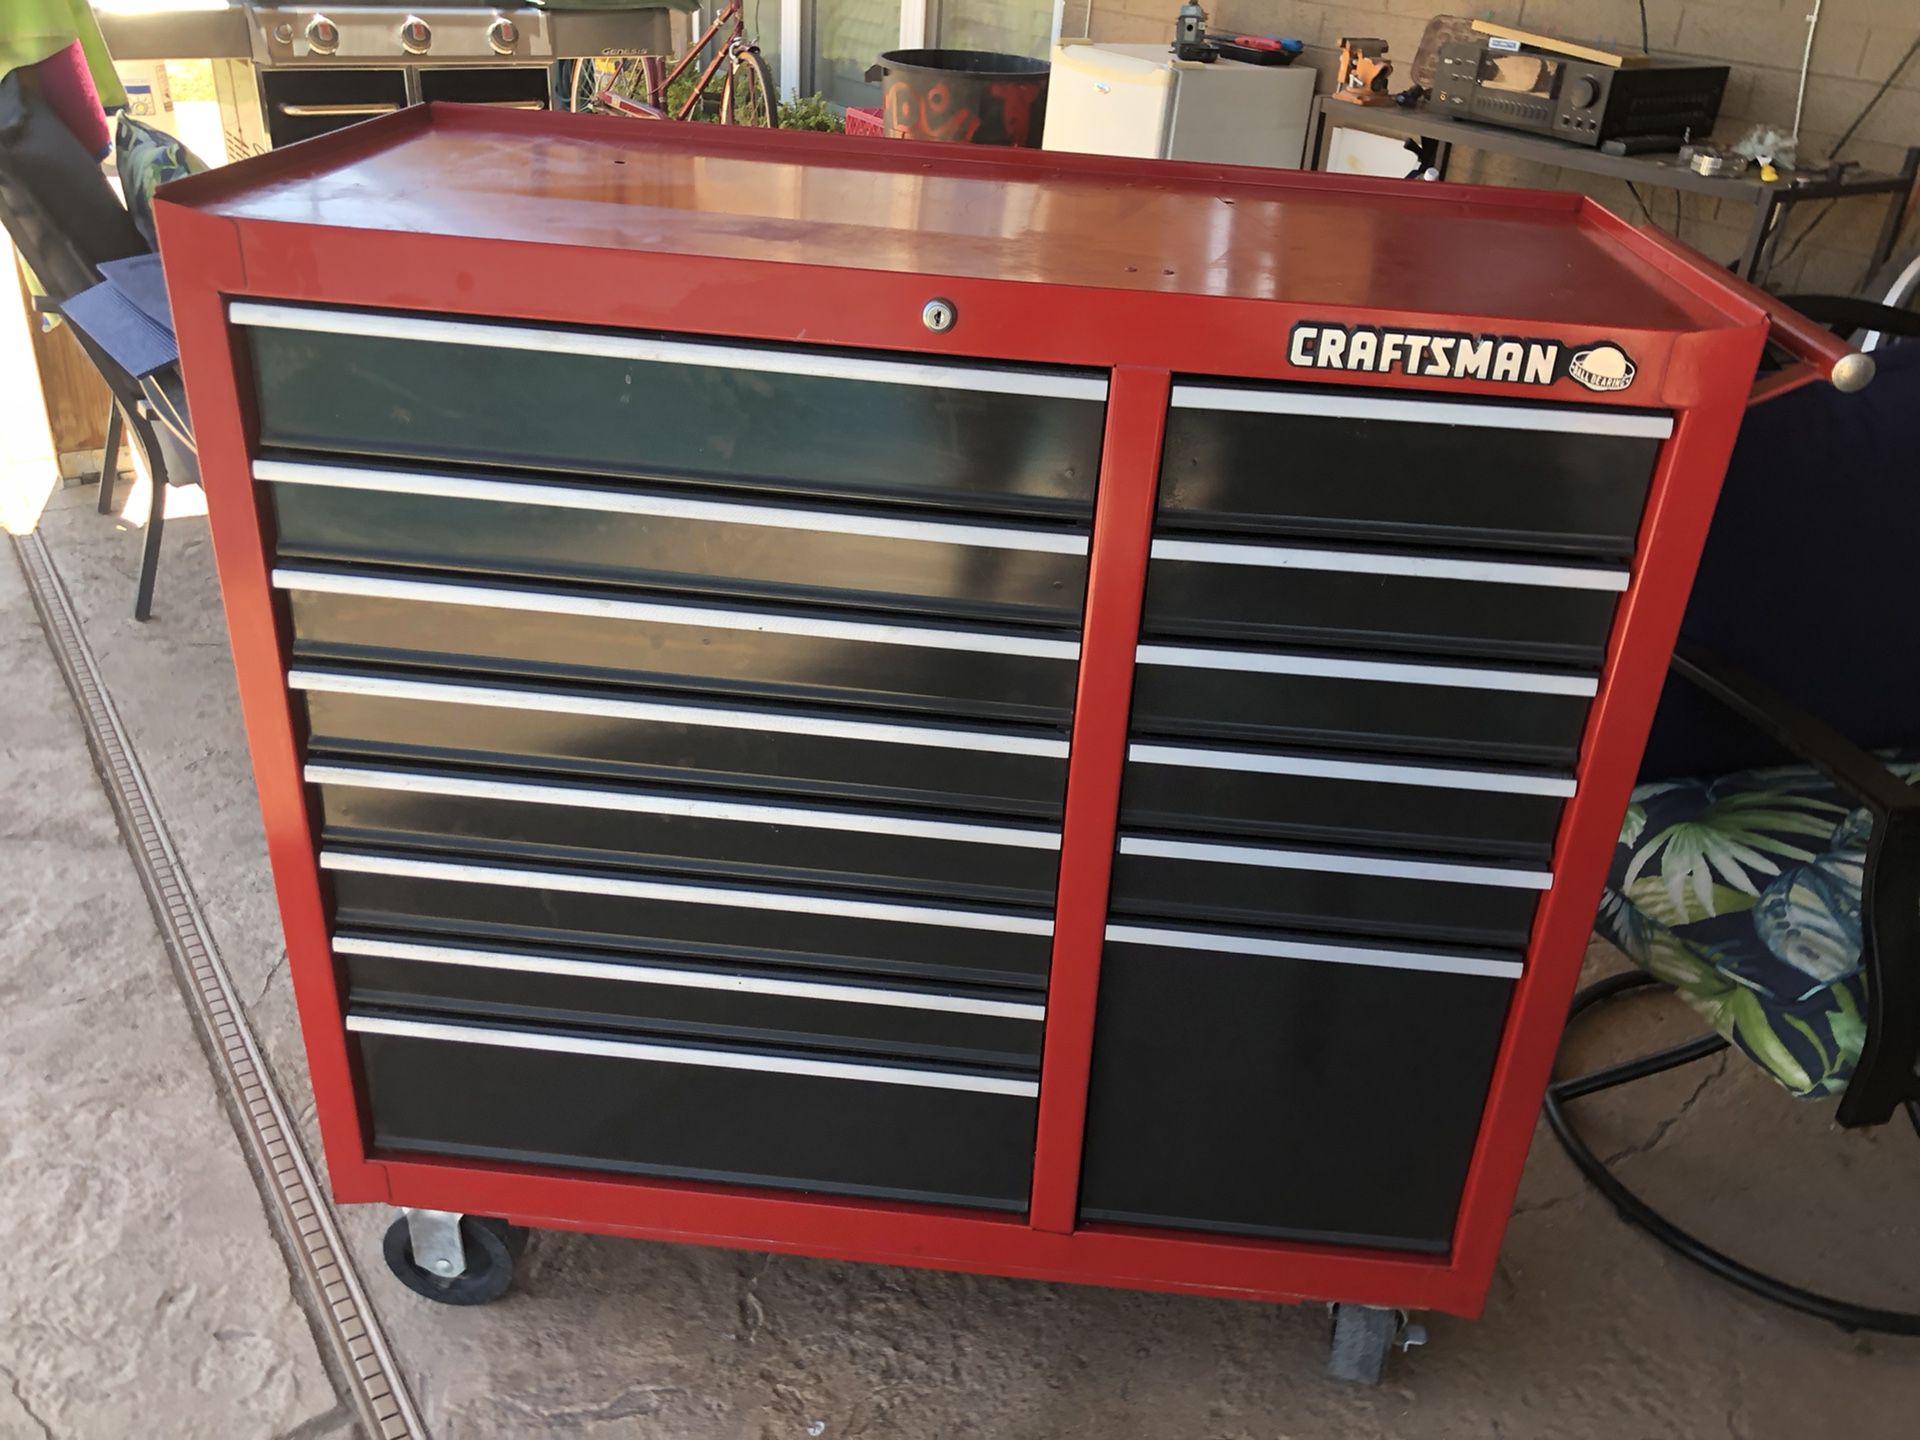 Craftsman 14 drawer tool chest